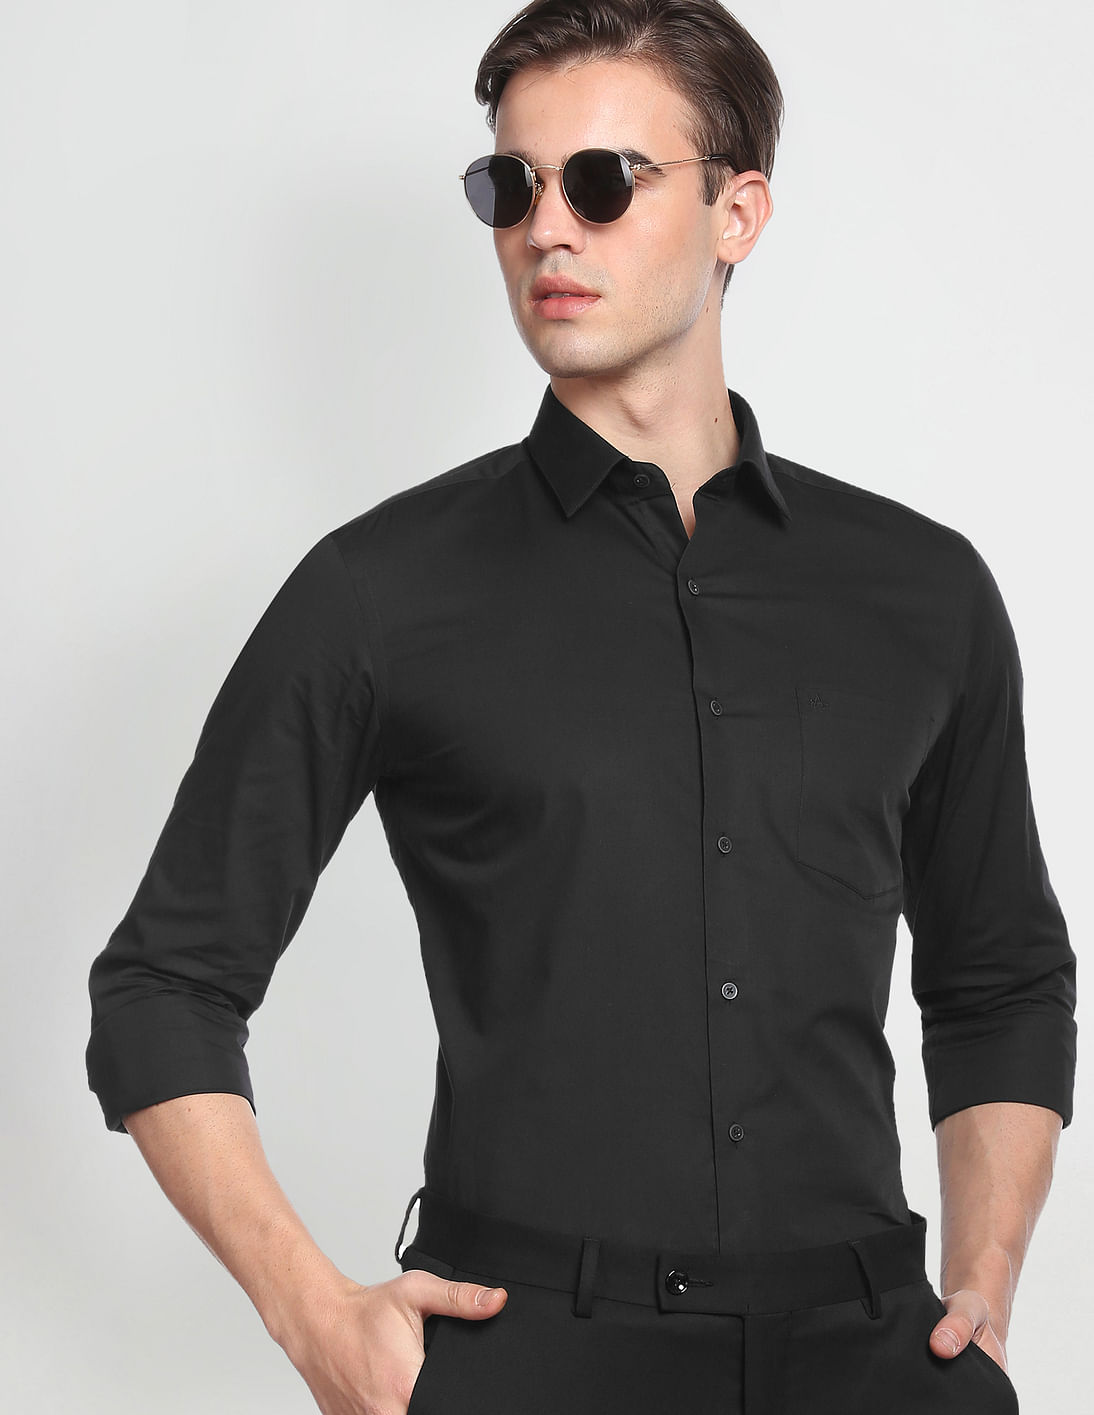 Buy Arrow Slim Fit Solid Formal Shirt - NNNOW.com